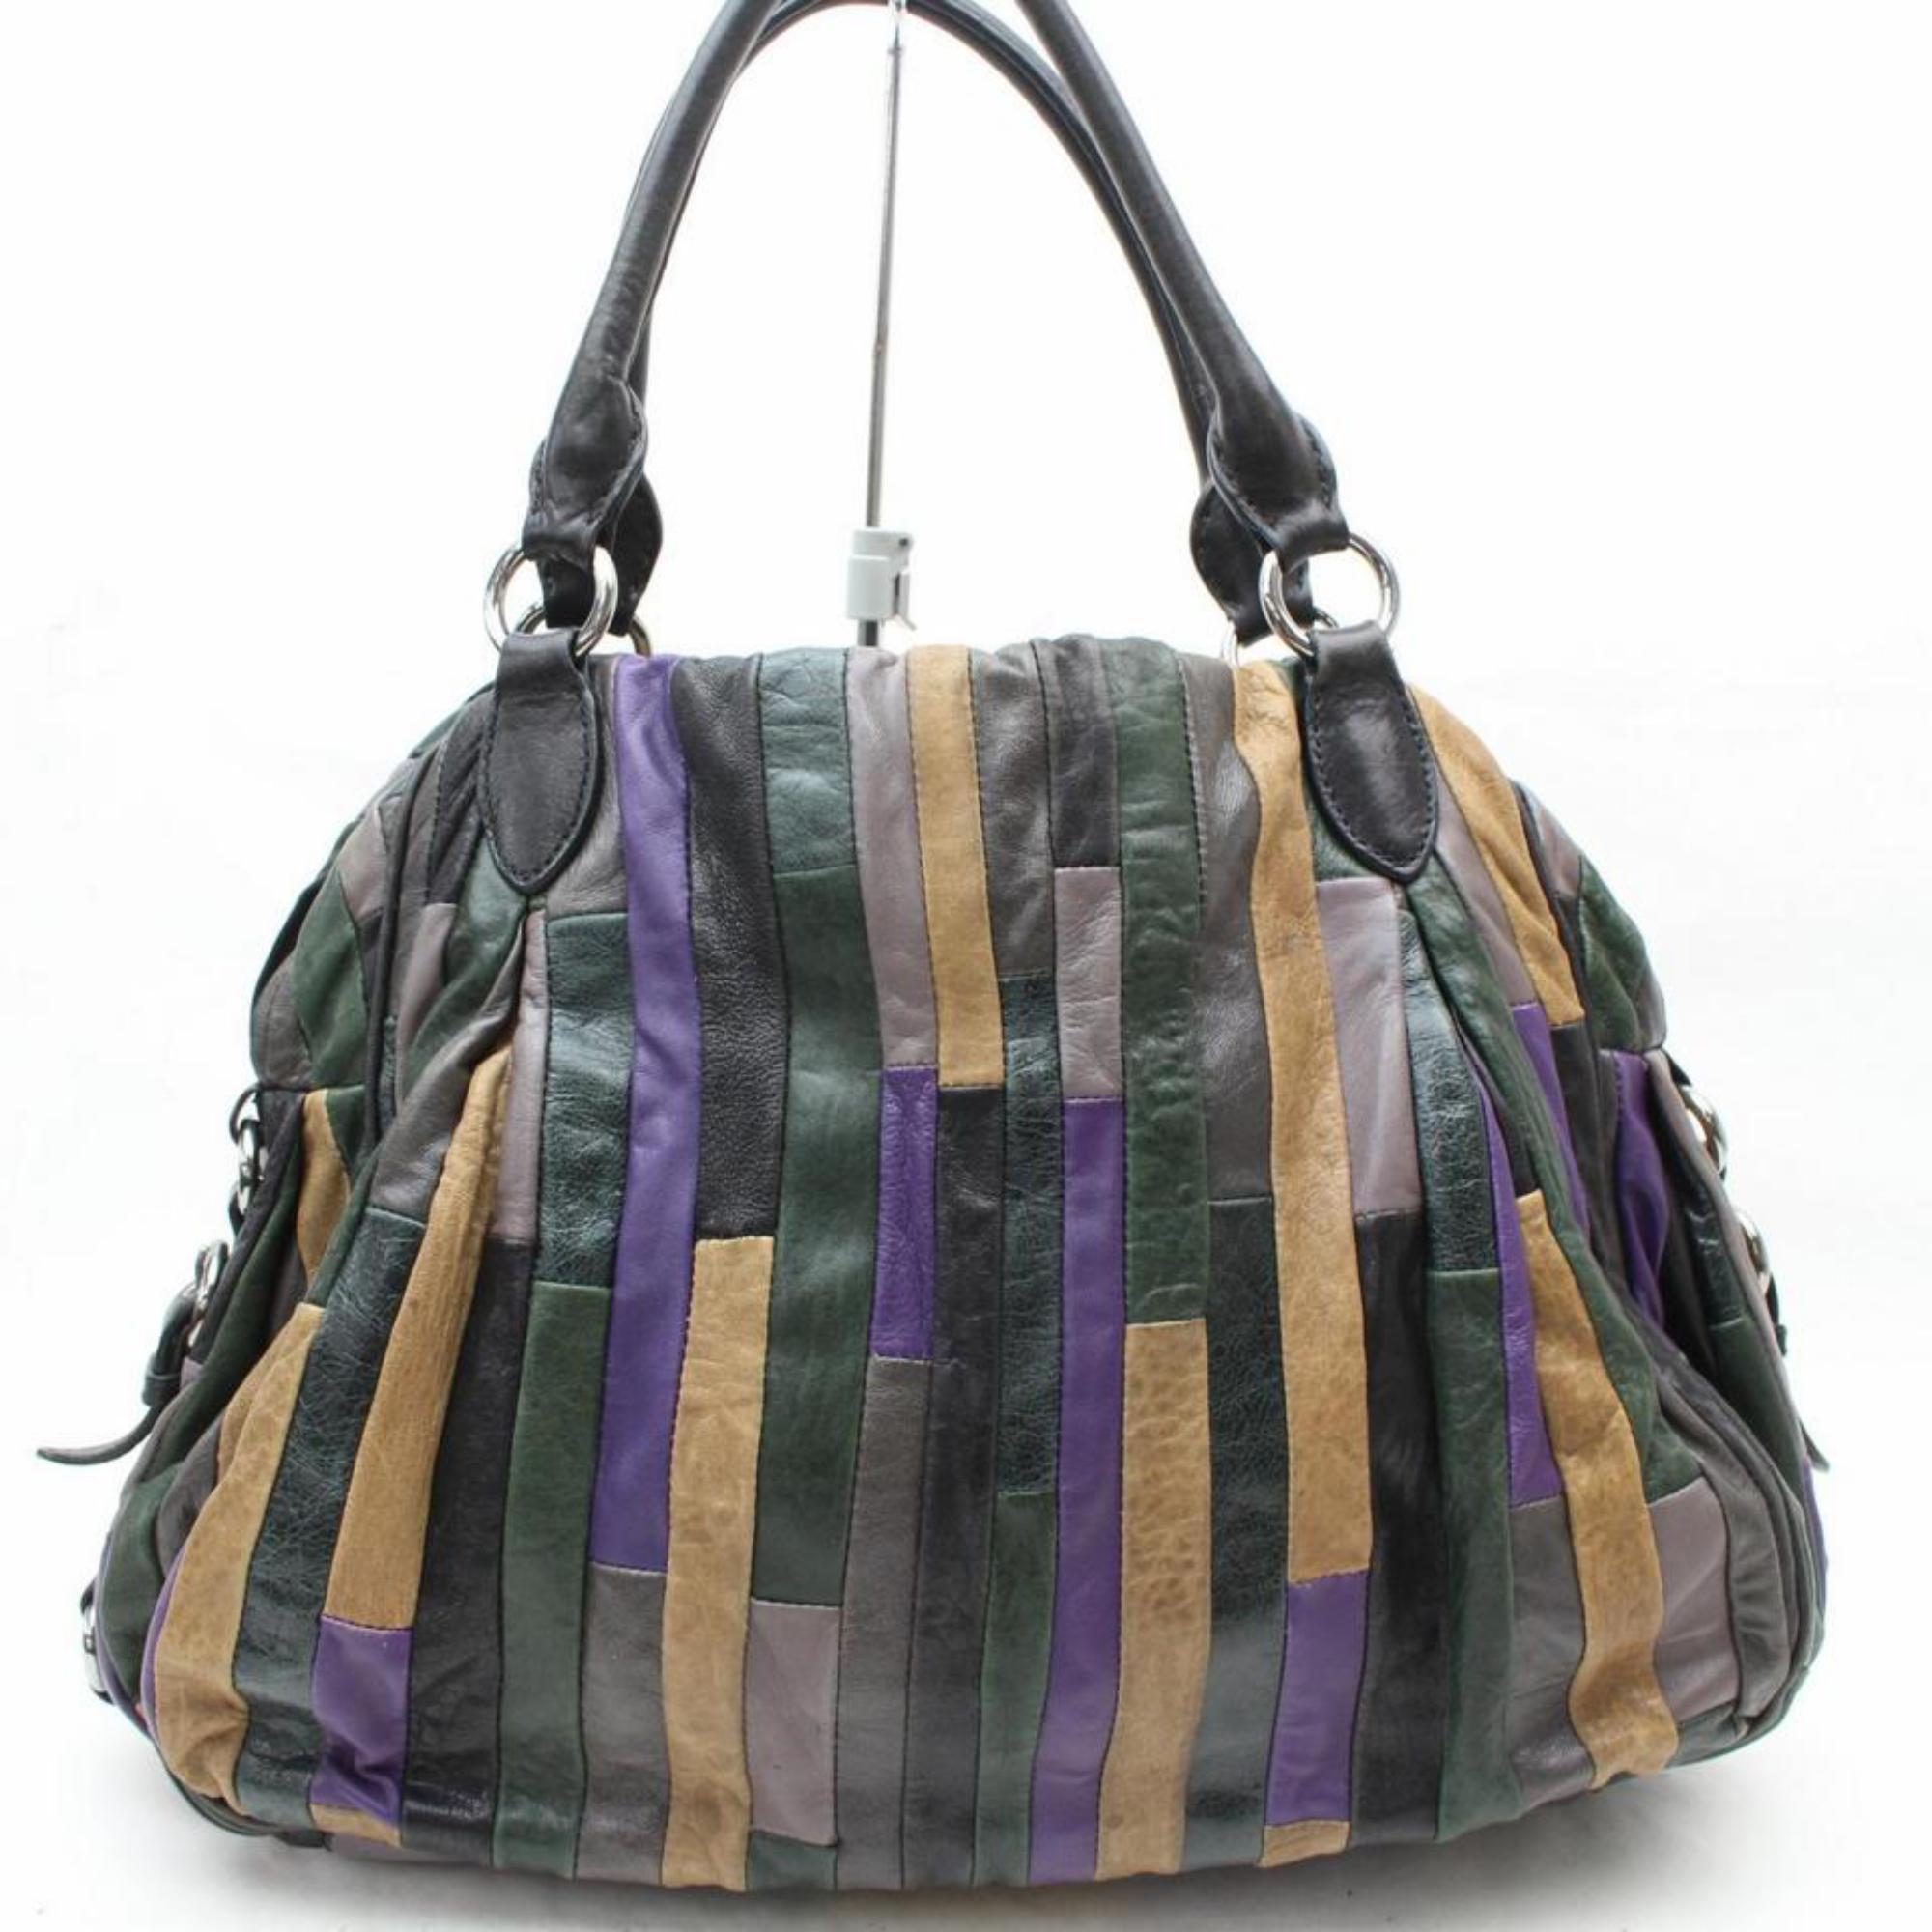 Women's Miu Miu Patchwork Hobo 869478 Multi Color Leather Shoulder Bag For Sale